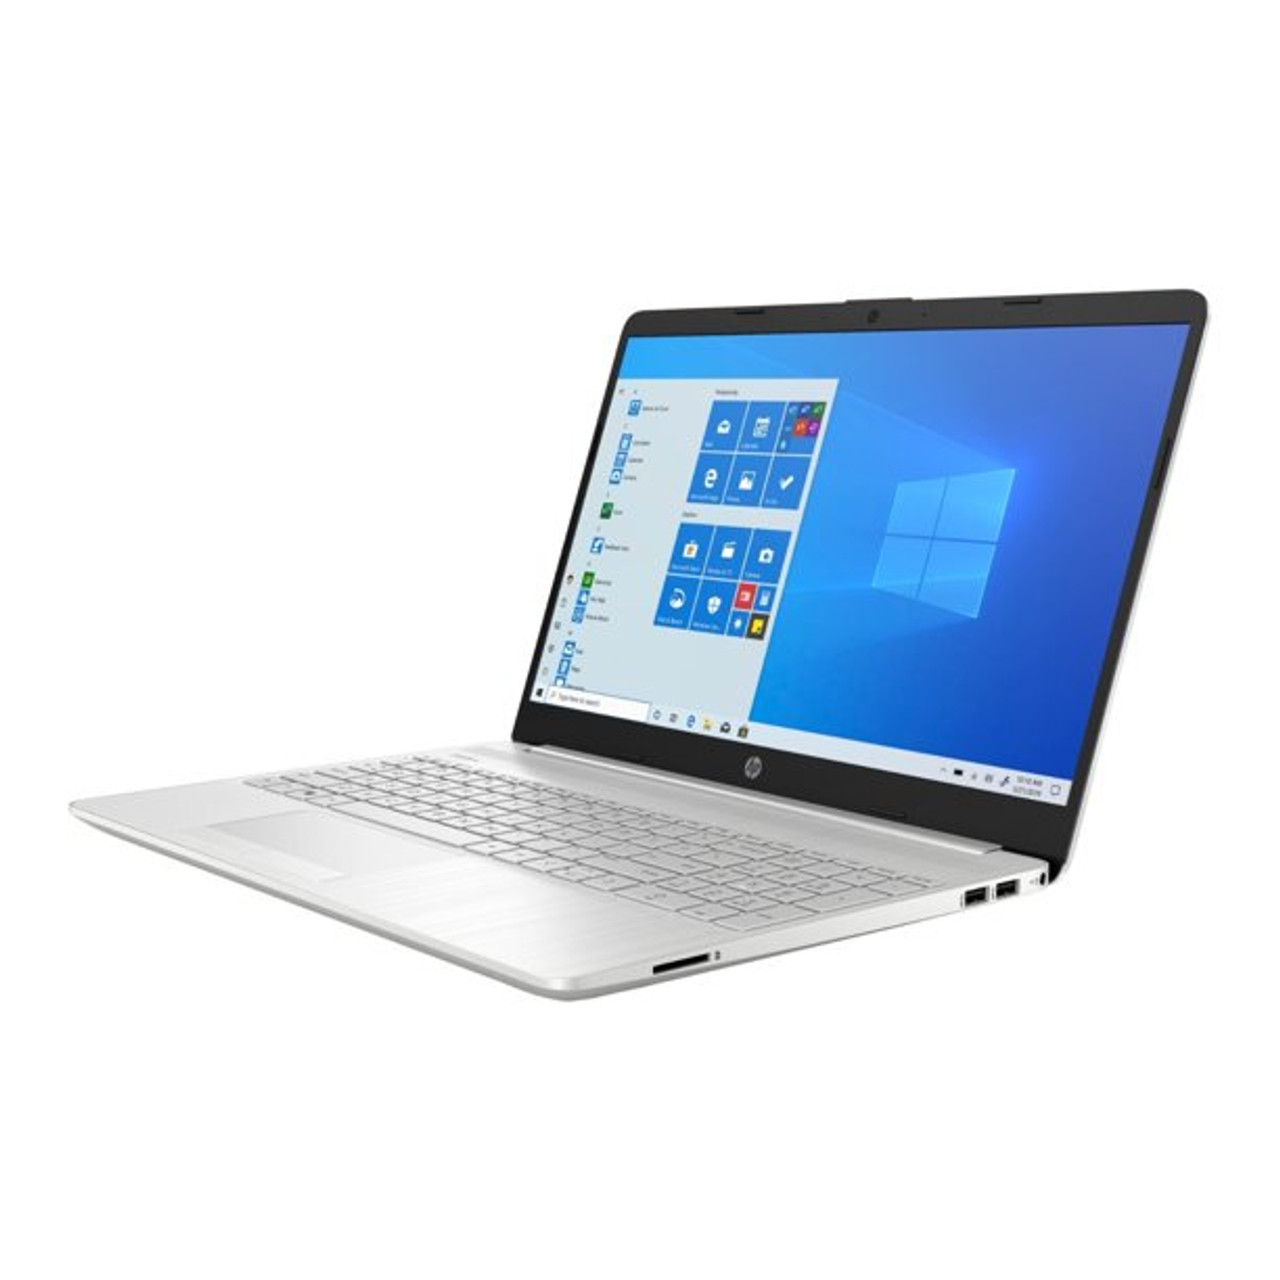 HP 15.6" HD Laptop Intel Celeron N4020 1.1GHz Processor; 4GB RAM